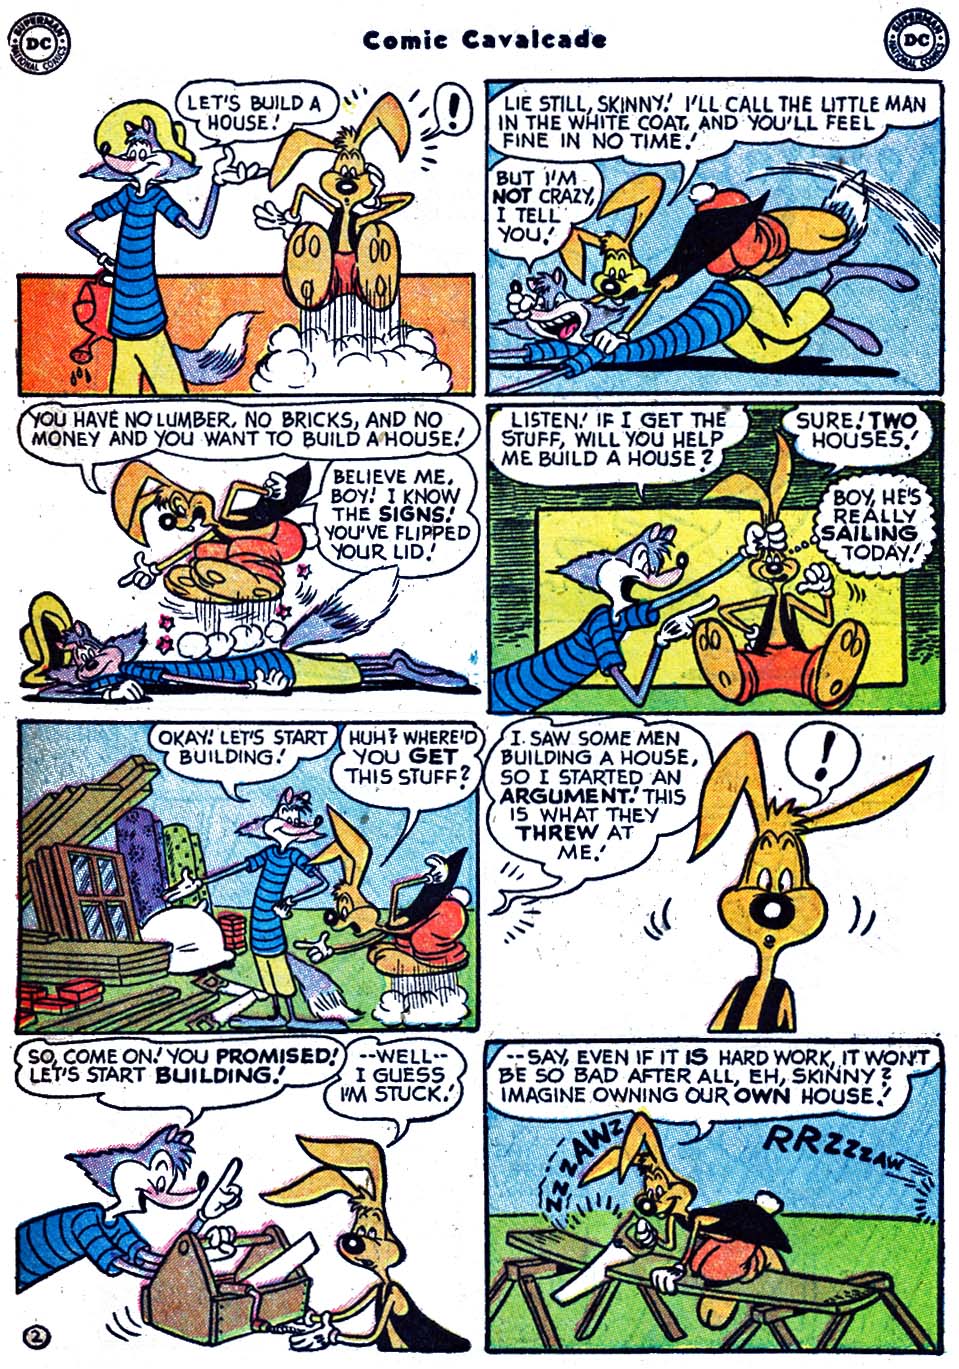 Comic Cavalcade issue 53 - Page 56